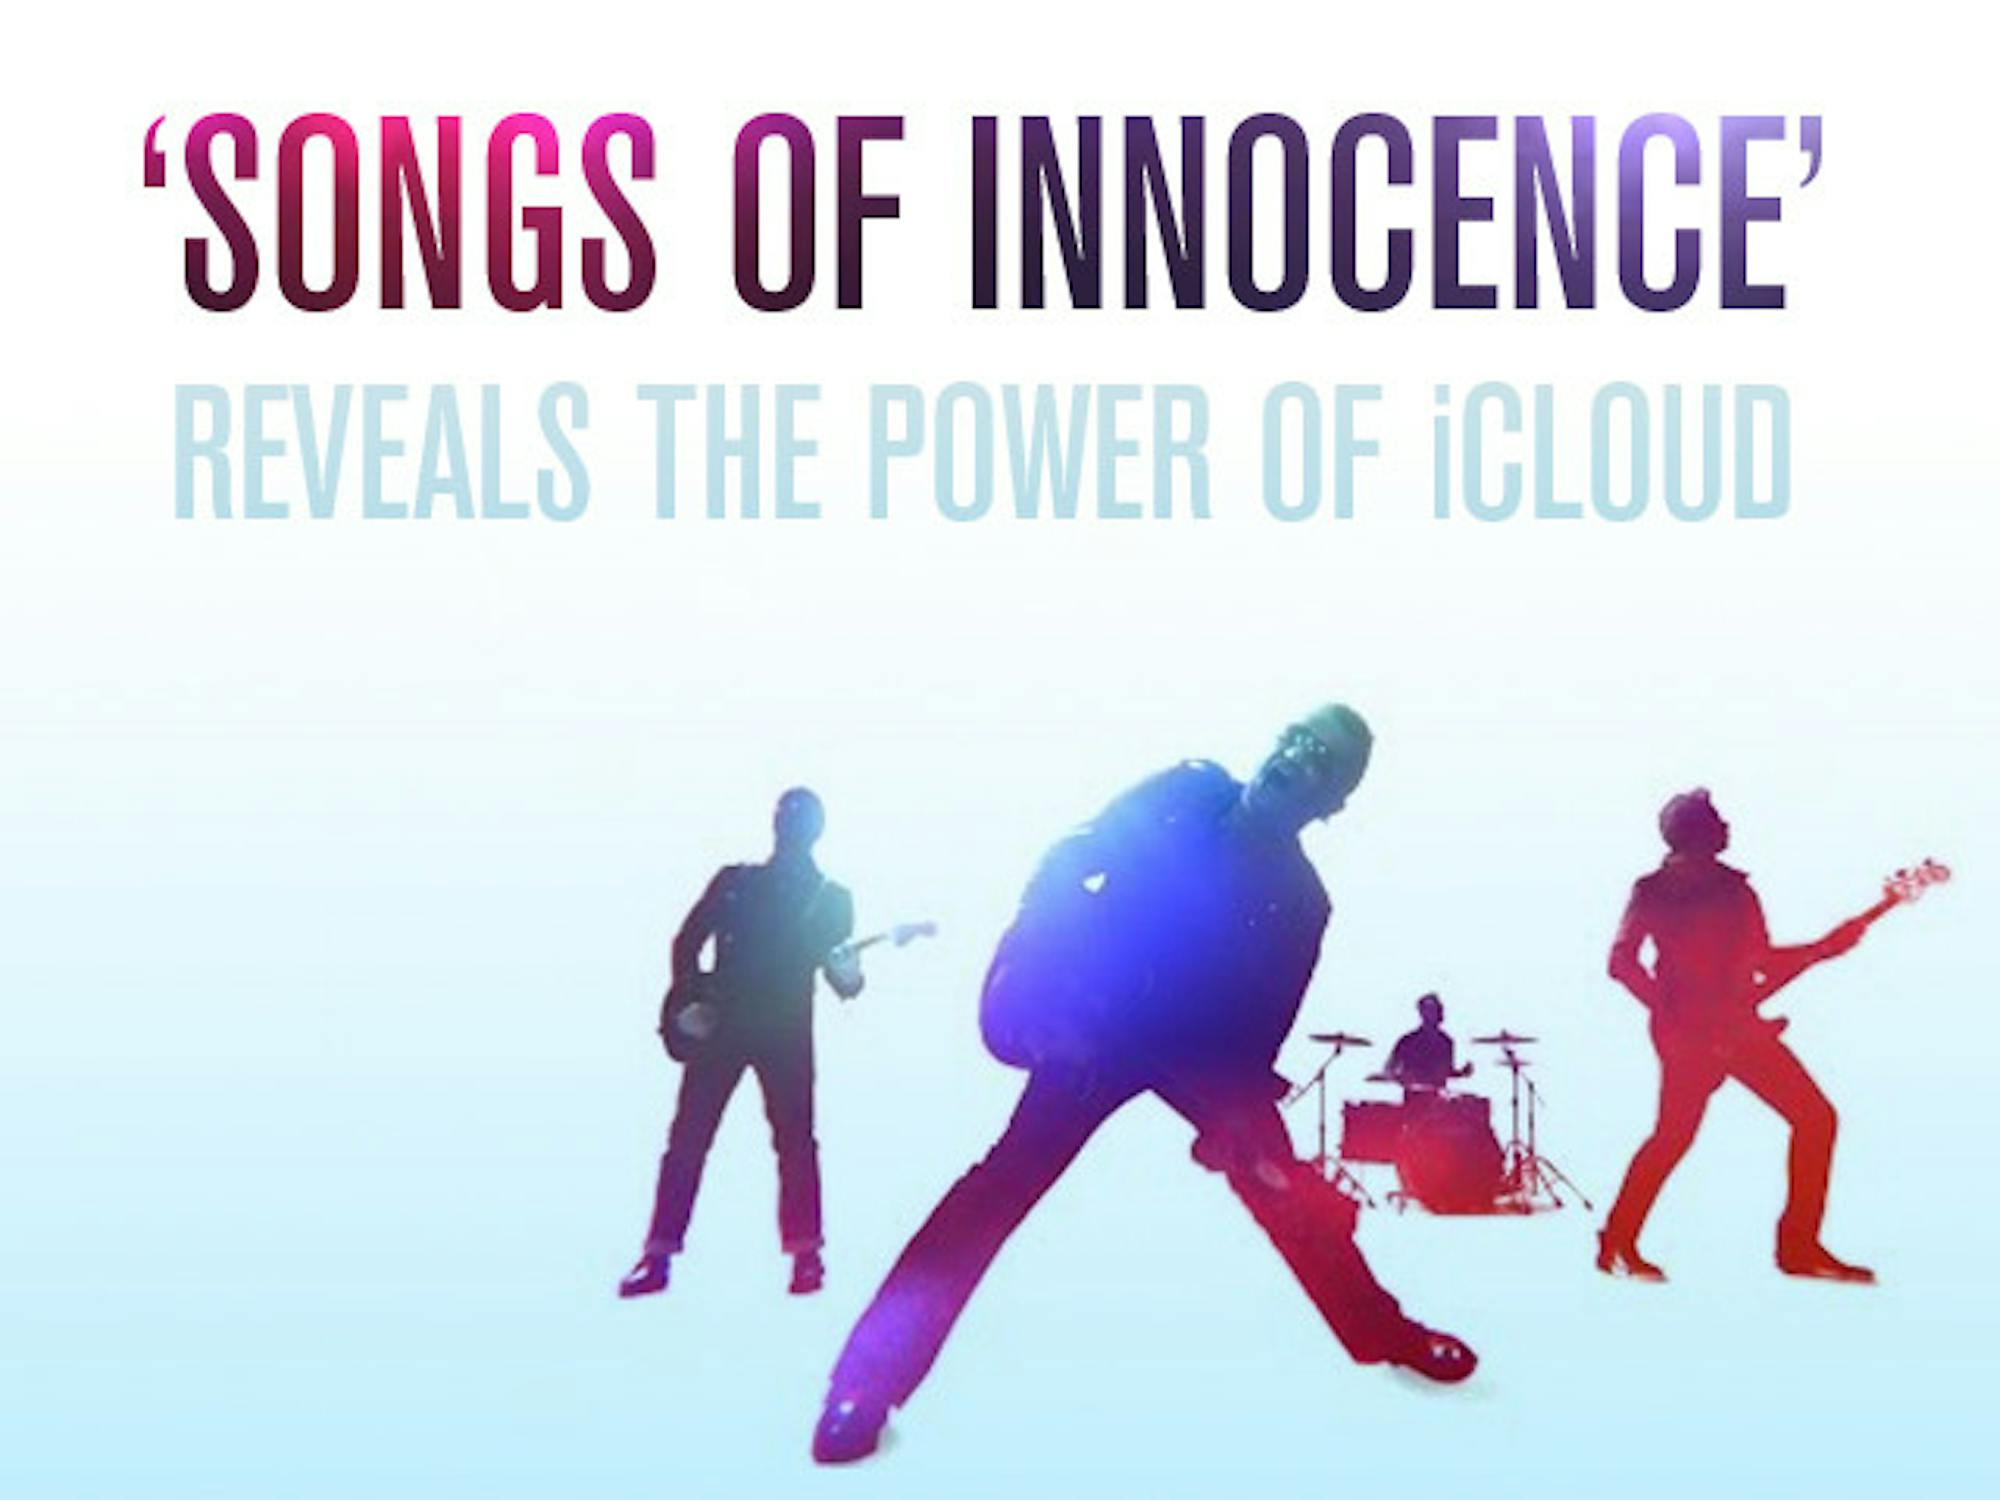 web_songs of innocence_9-16-2015